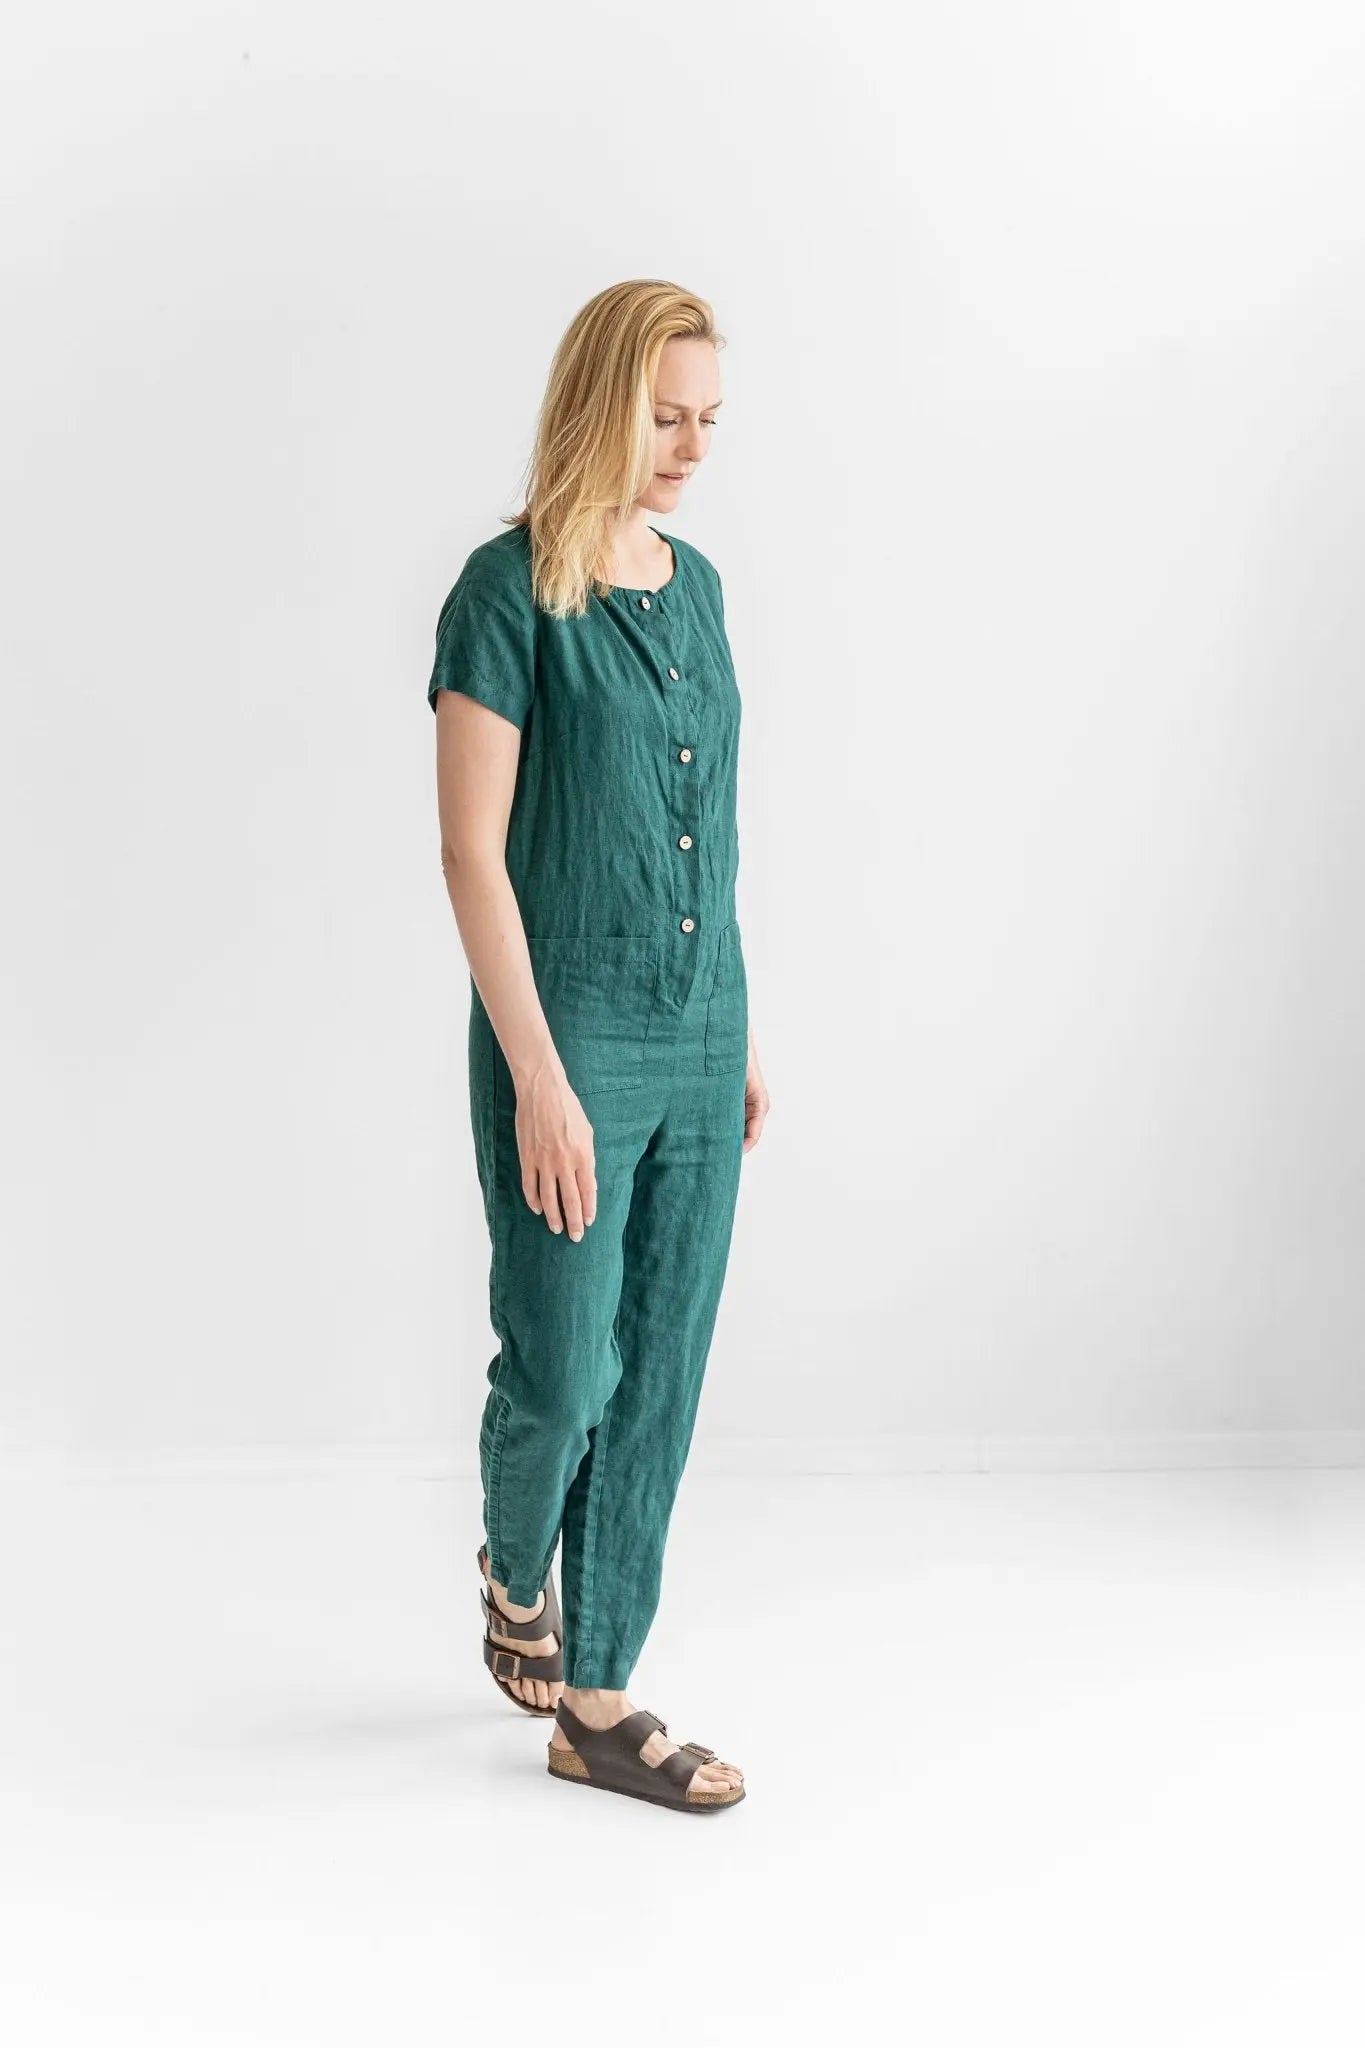 Linen Jumpsuit with Front Pockets - Epic Linen luxury linen